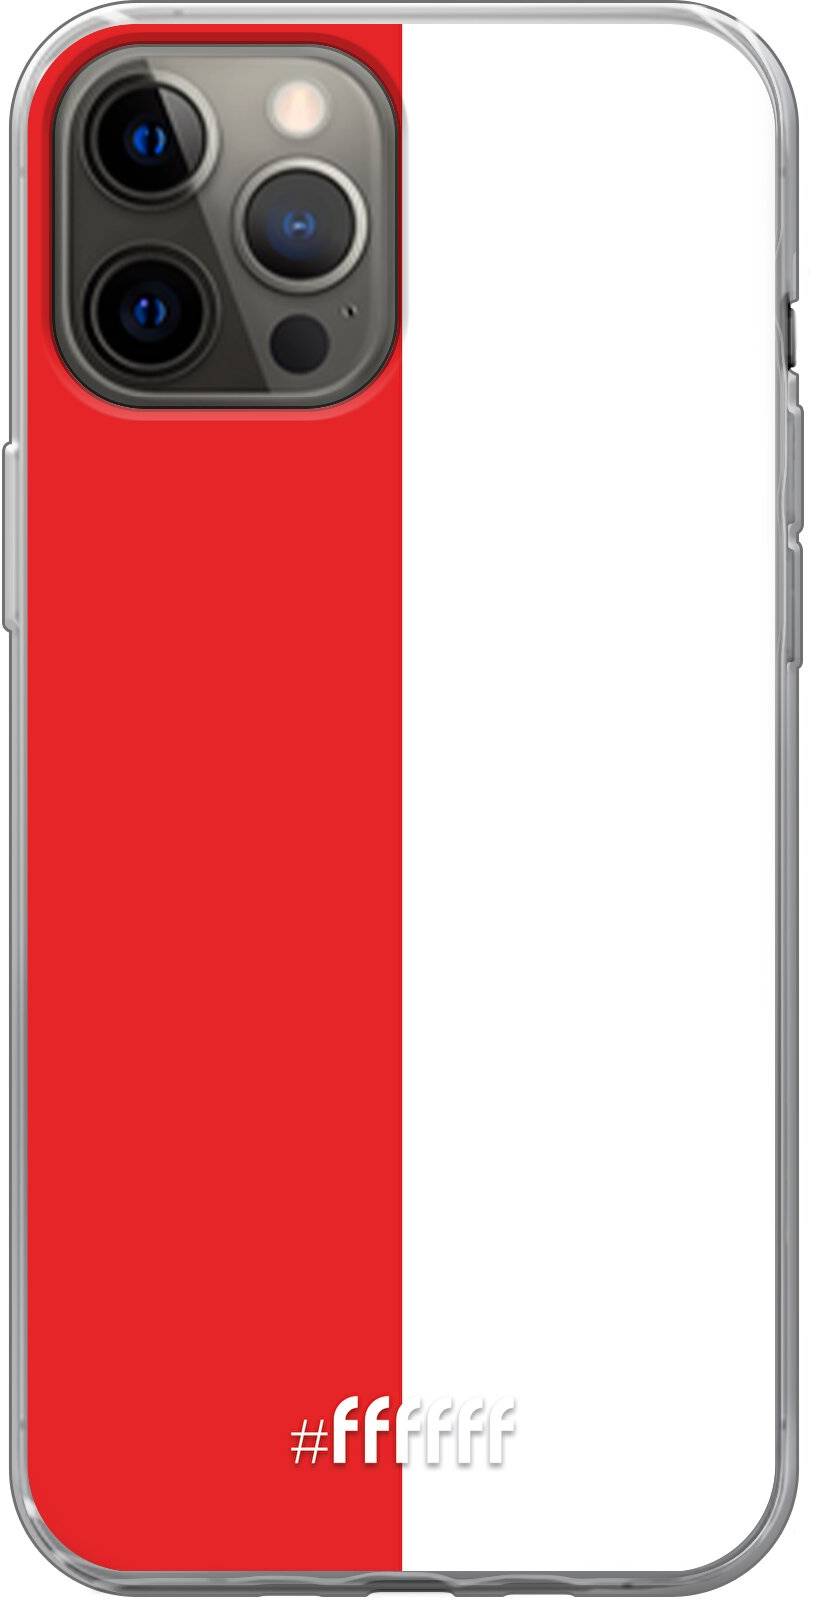 Feyenoord iPhone 12 Pro Max